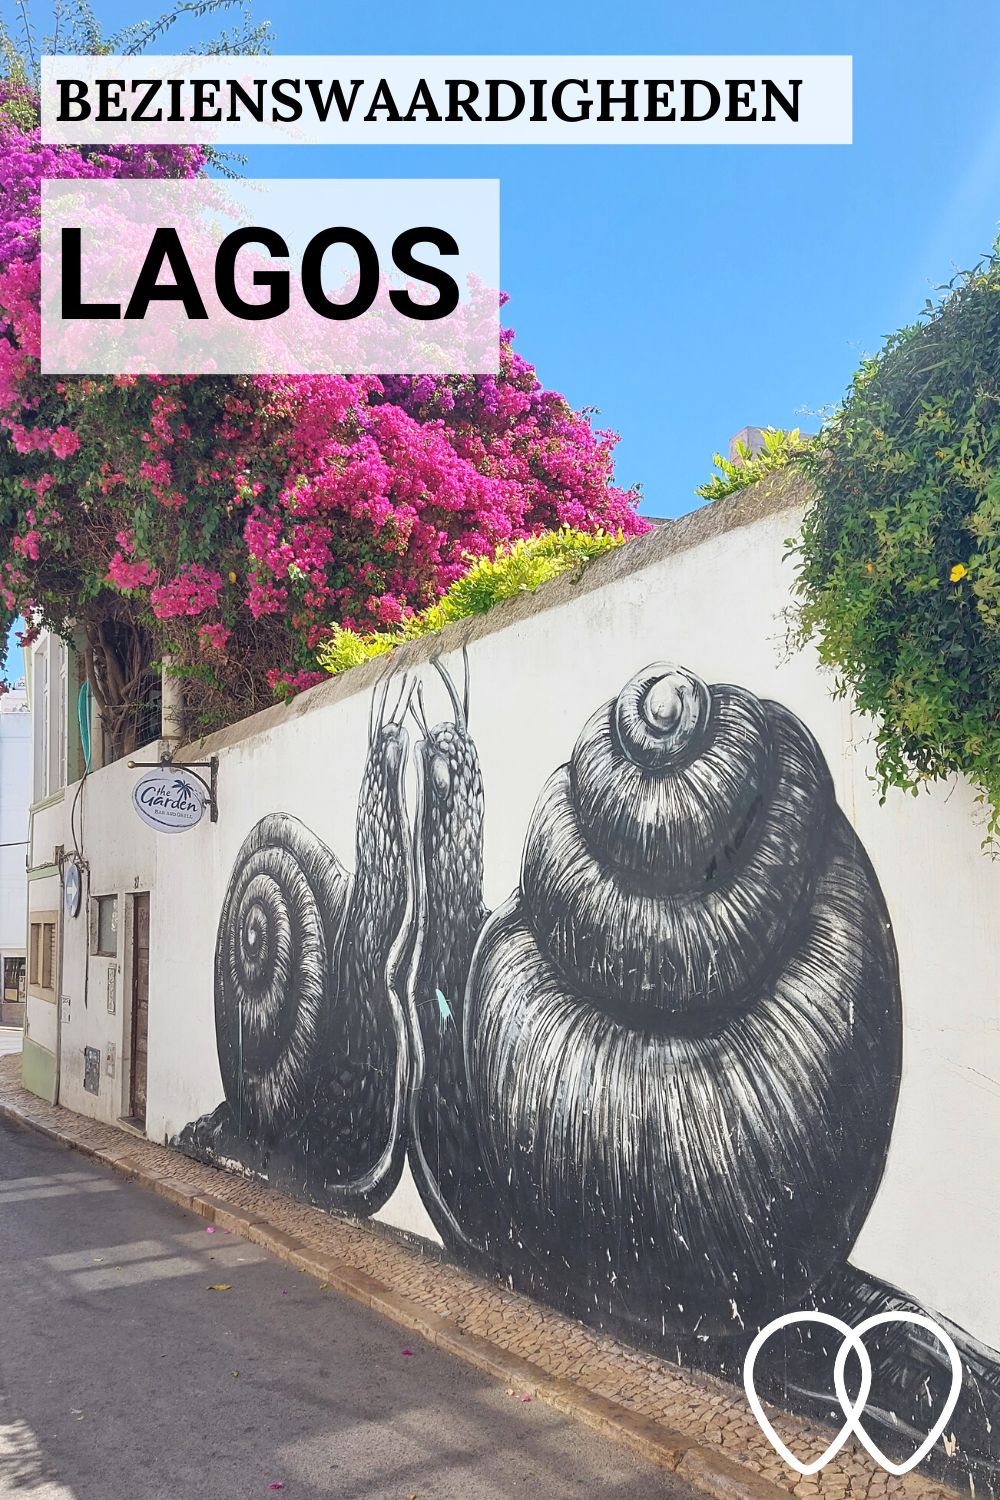 Lagos, Portugal: de leukste bezienswaardigheden in Lagos | Mooistestedentrips.nl